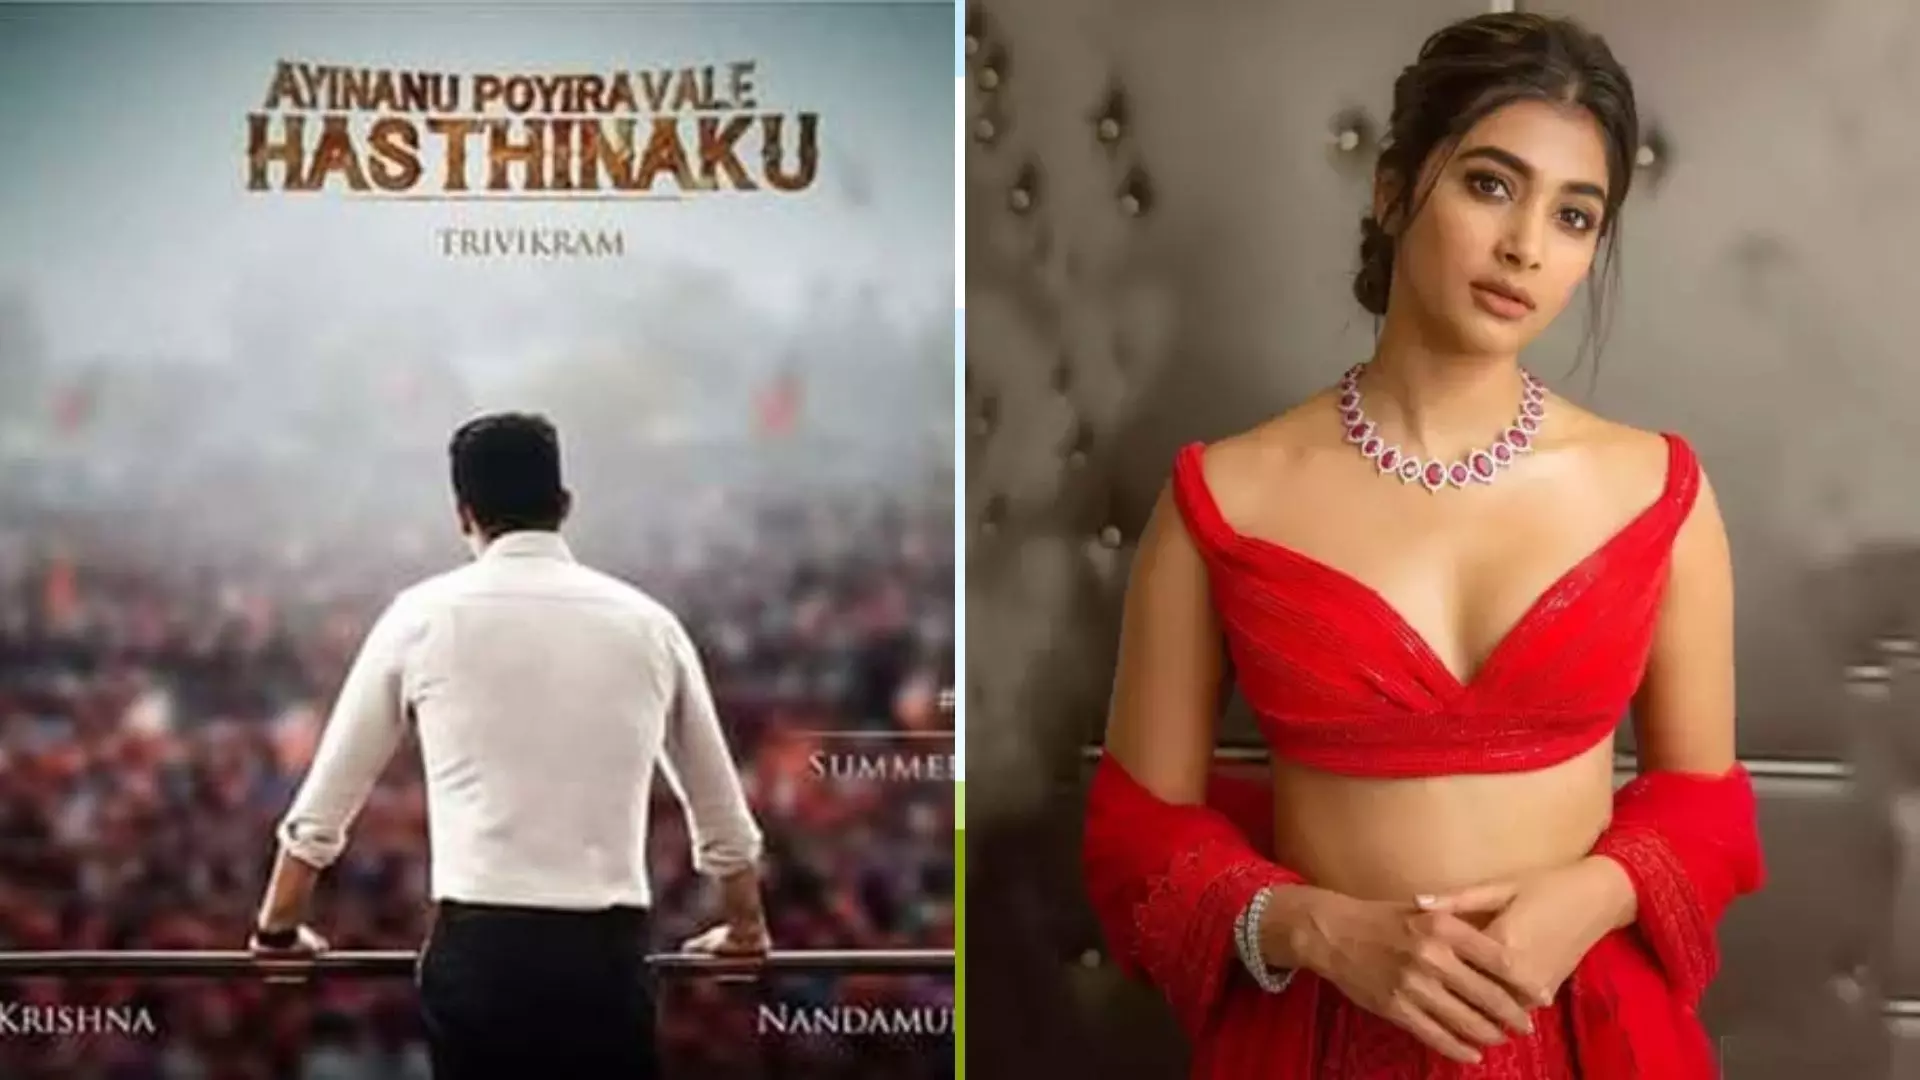 Pooja Hegde as a Heroine yet to Confirm For  Trivikram NTR30 Hasthinaku Movie | NTR 30 Movie Update